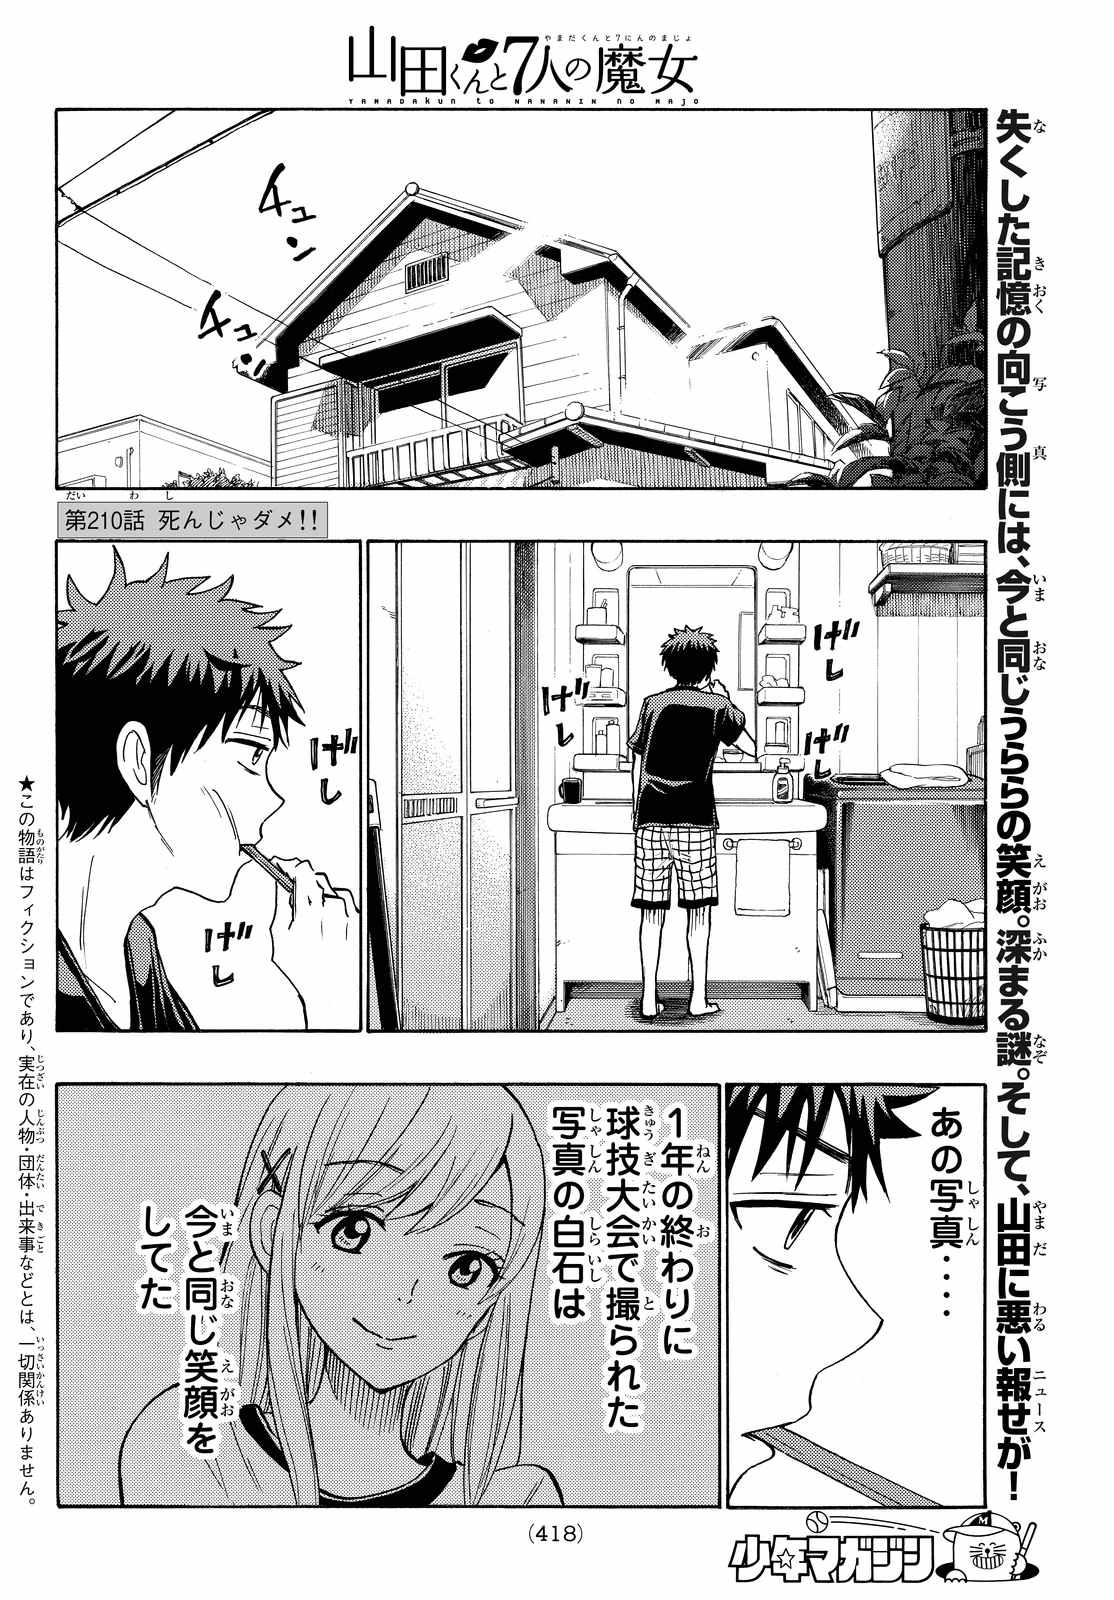 Yamada-kun to 7-nin no Majo - Chapter 210 - Page 2